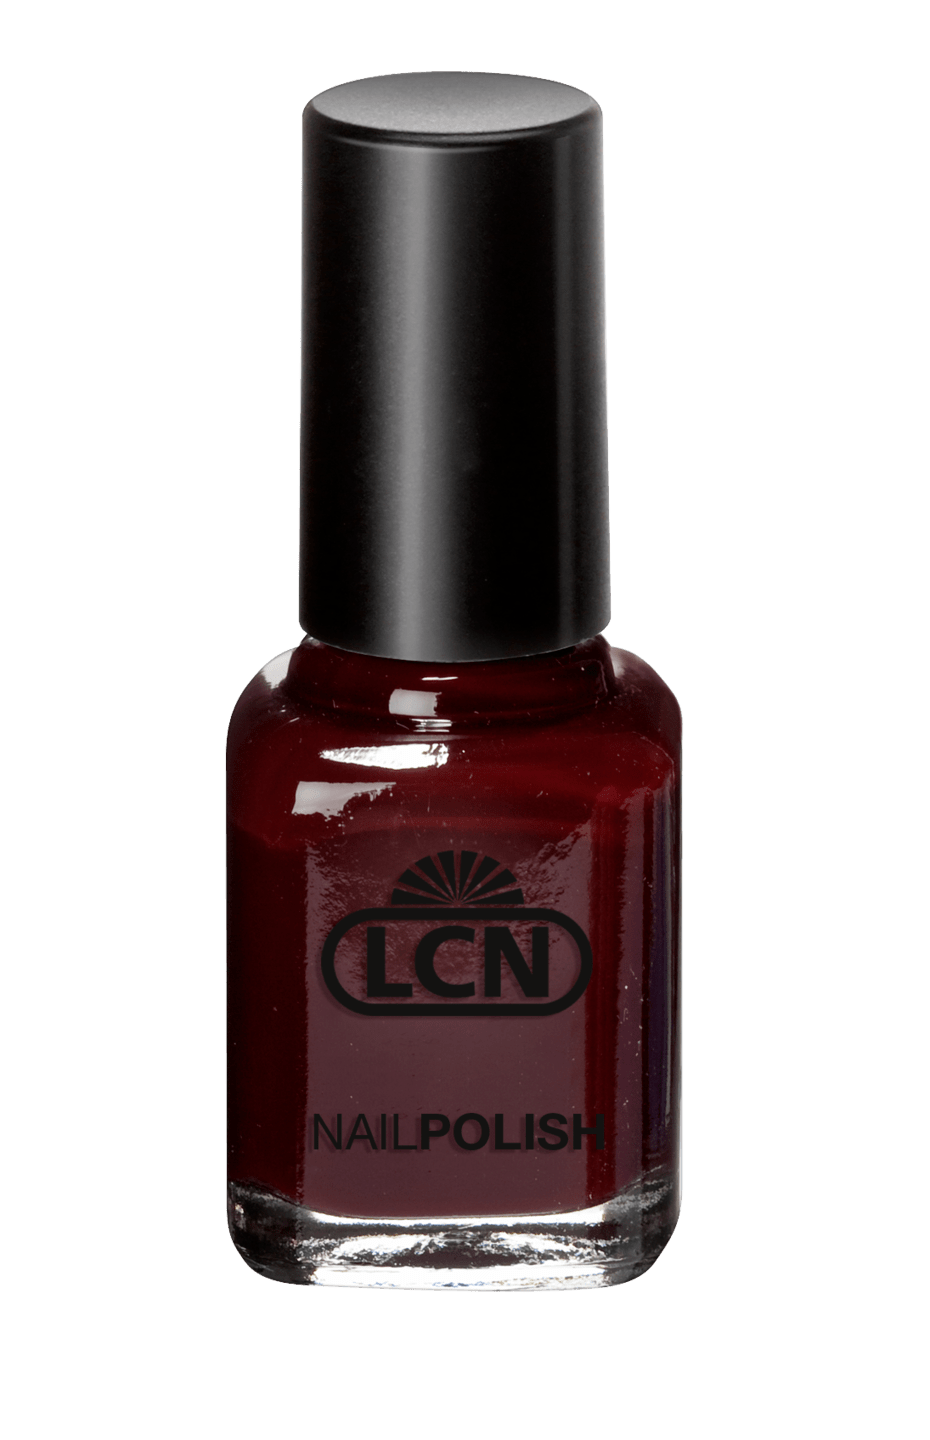 LCN - Nagellack, 8 ml in dark cherry (59)